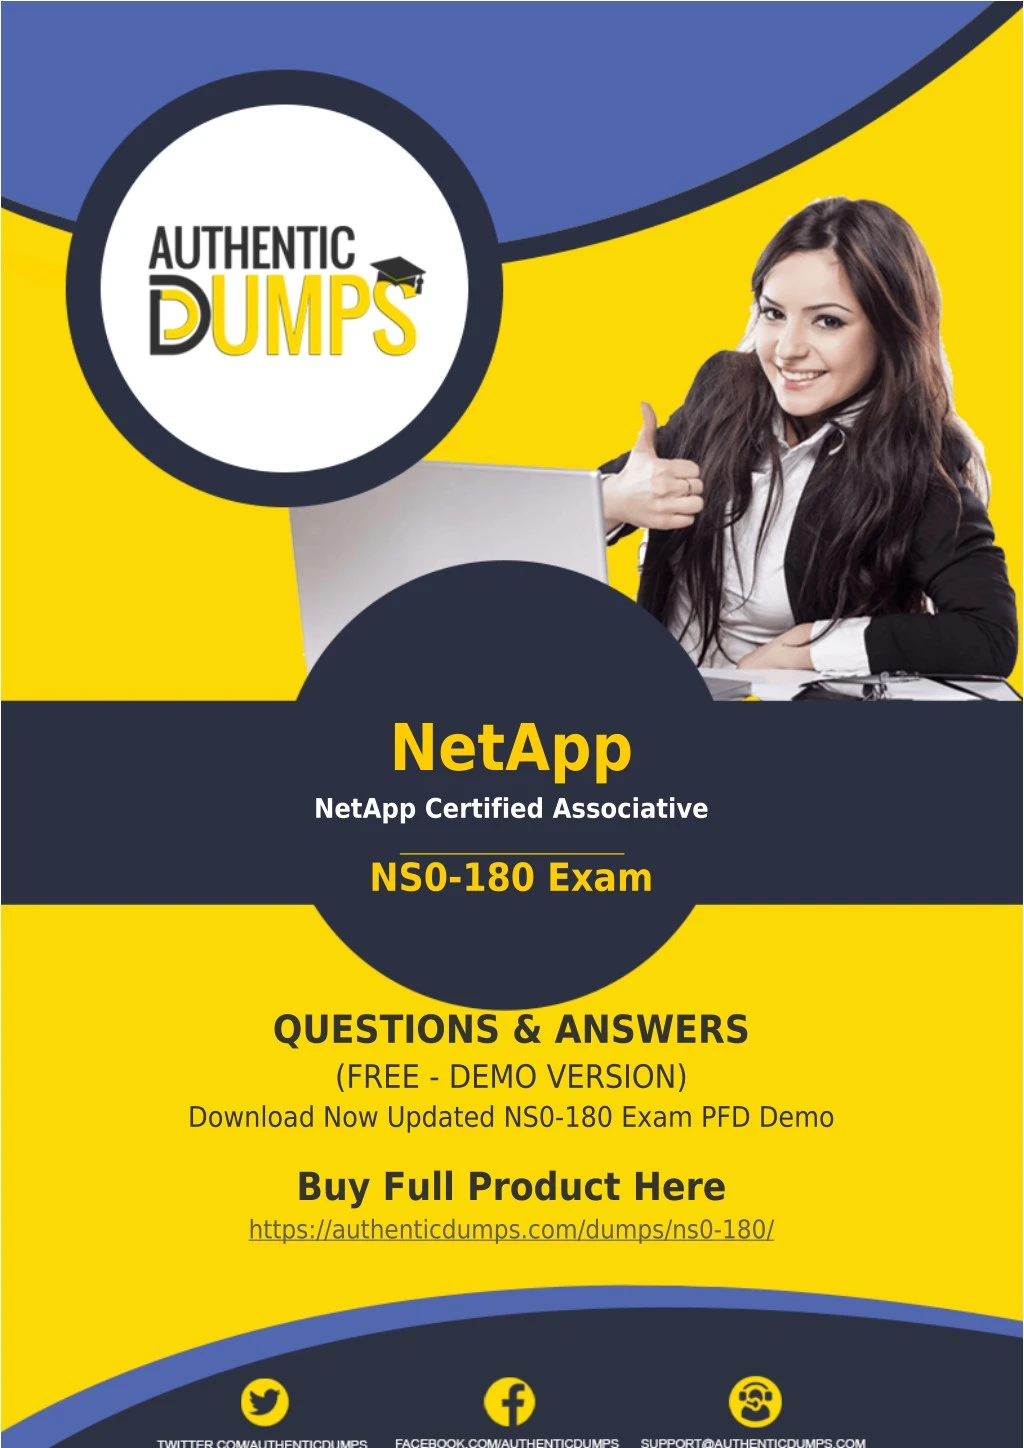 netapp netapp certified associative